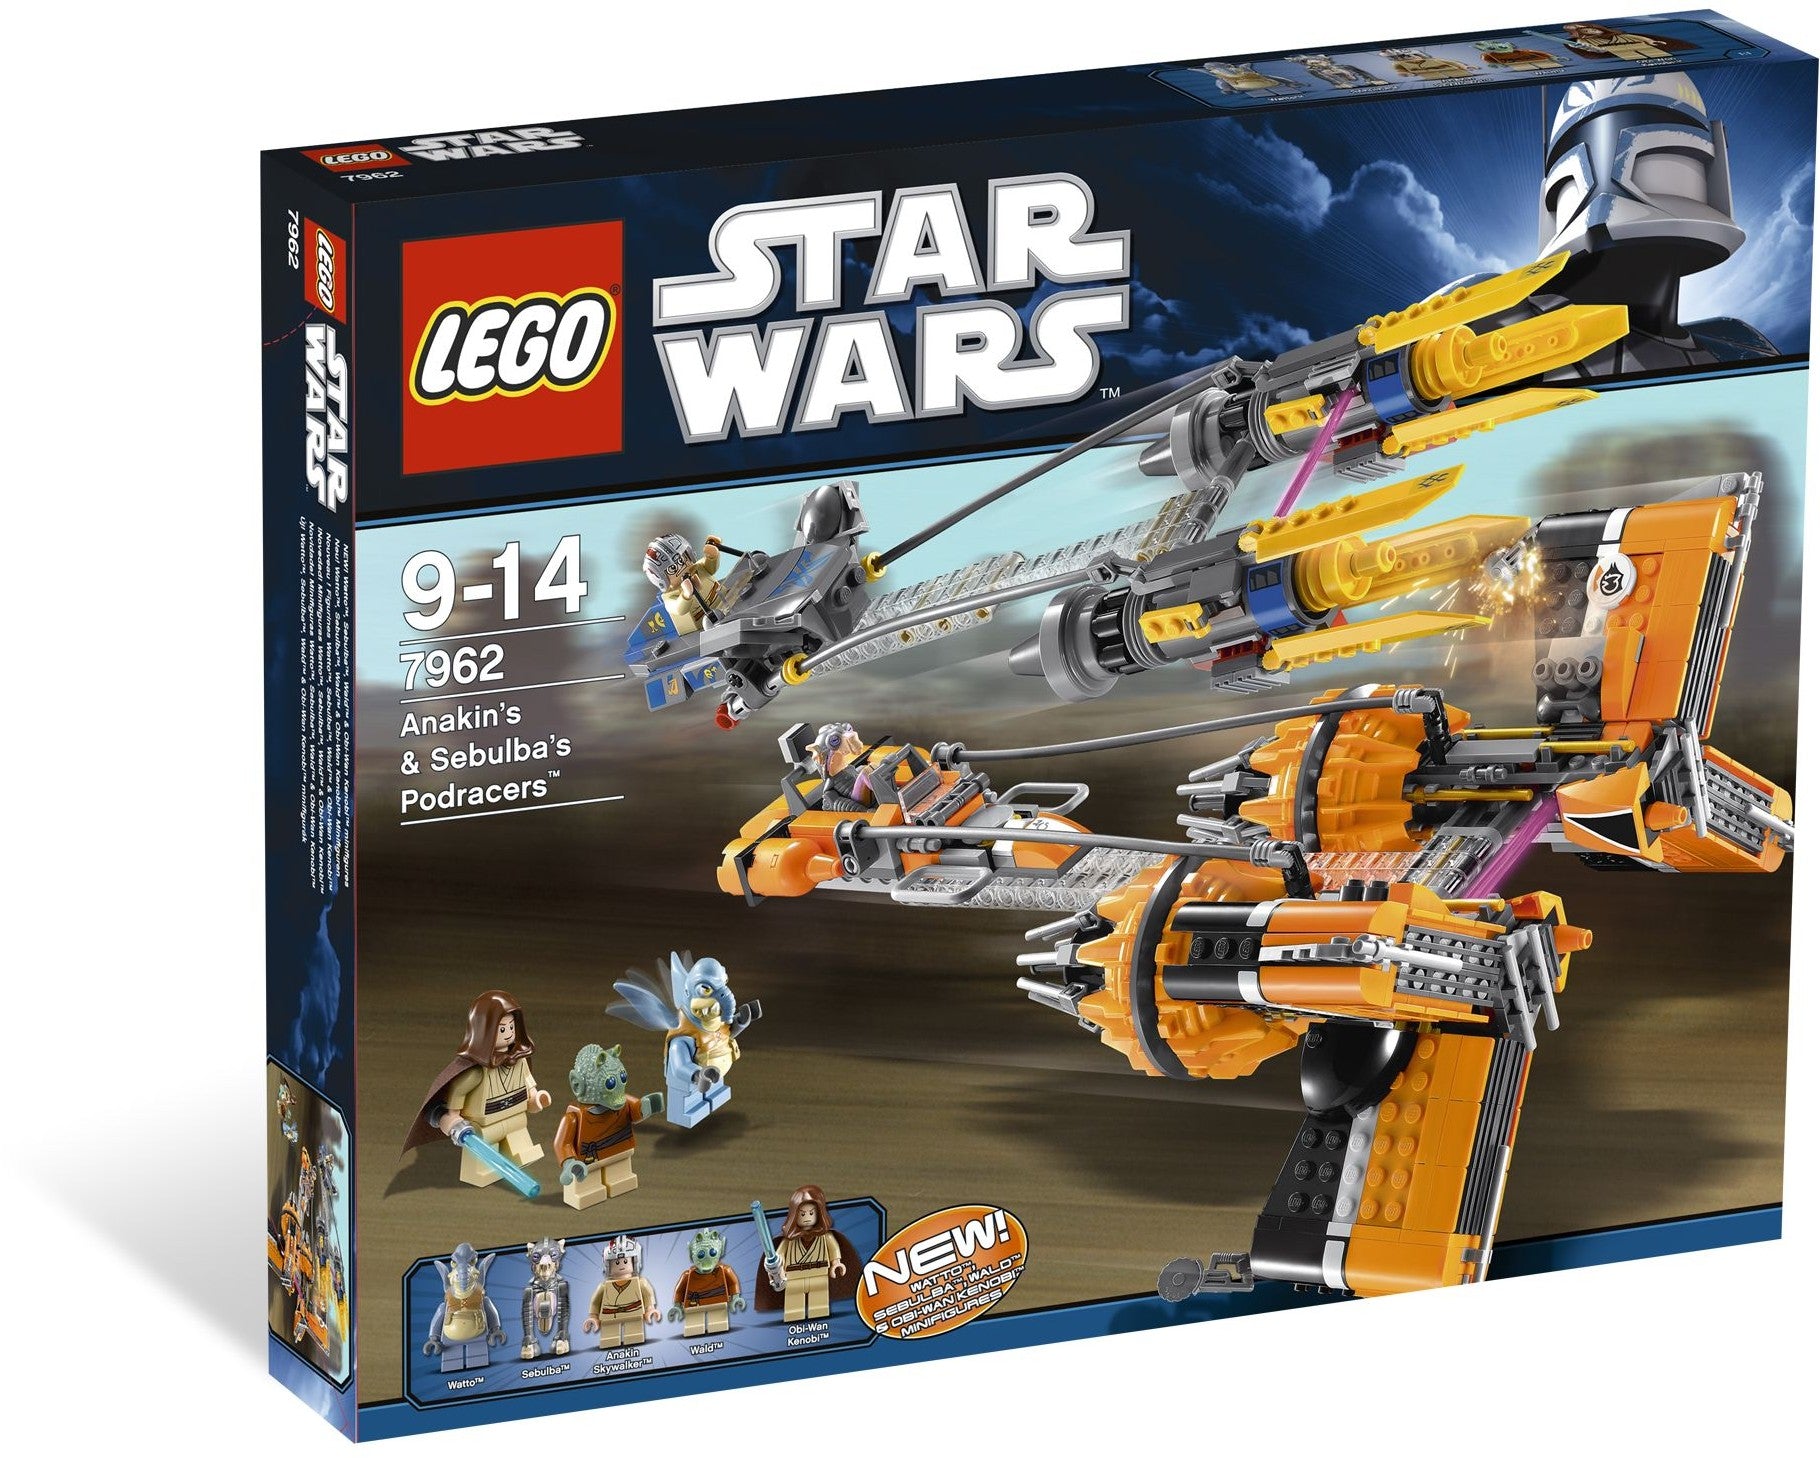 Lego Star Wars 7962 - Anakin Skywalker and Sebulba's Podrace